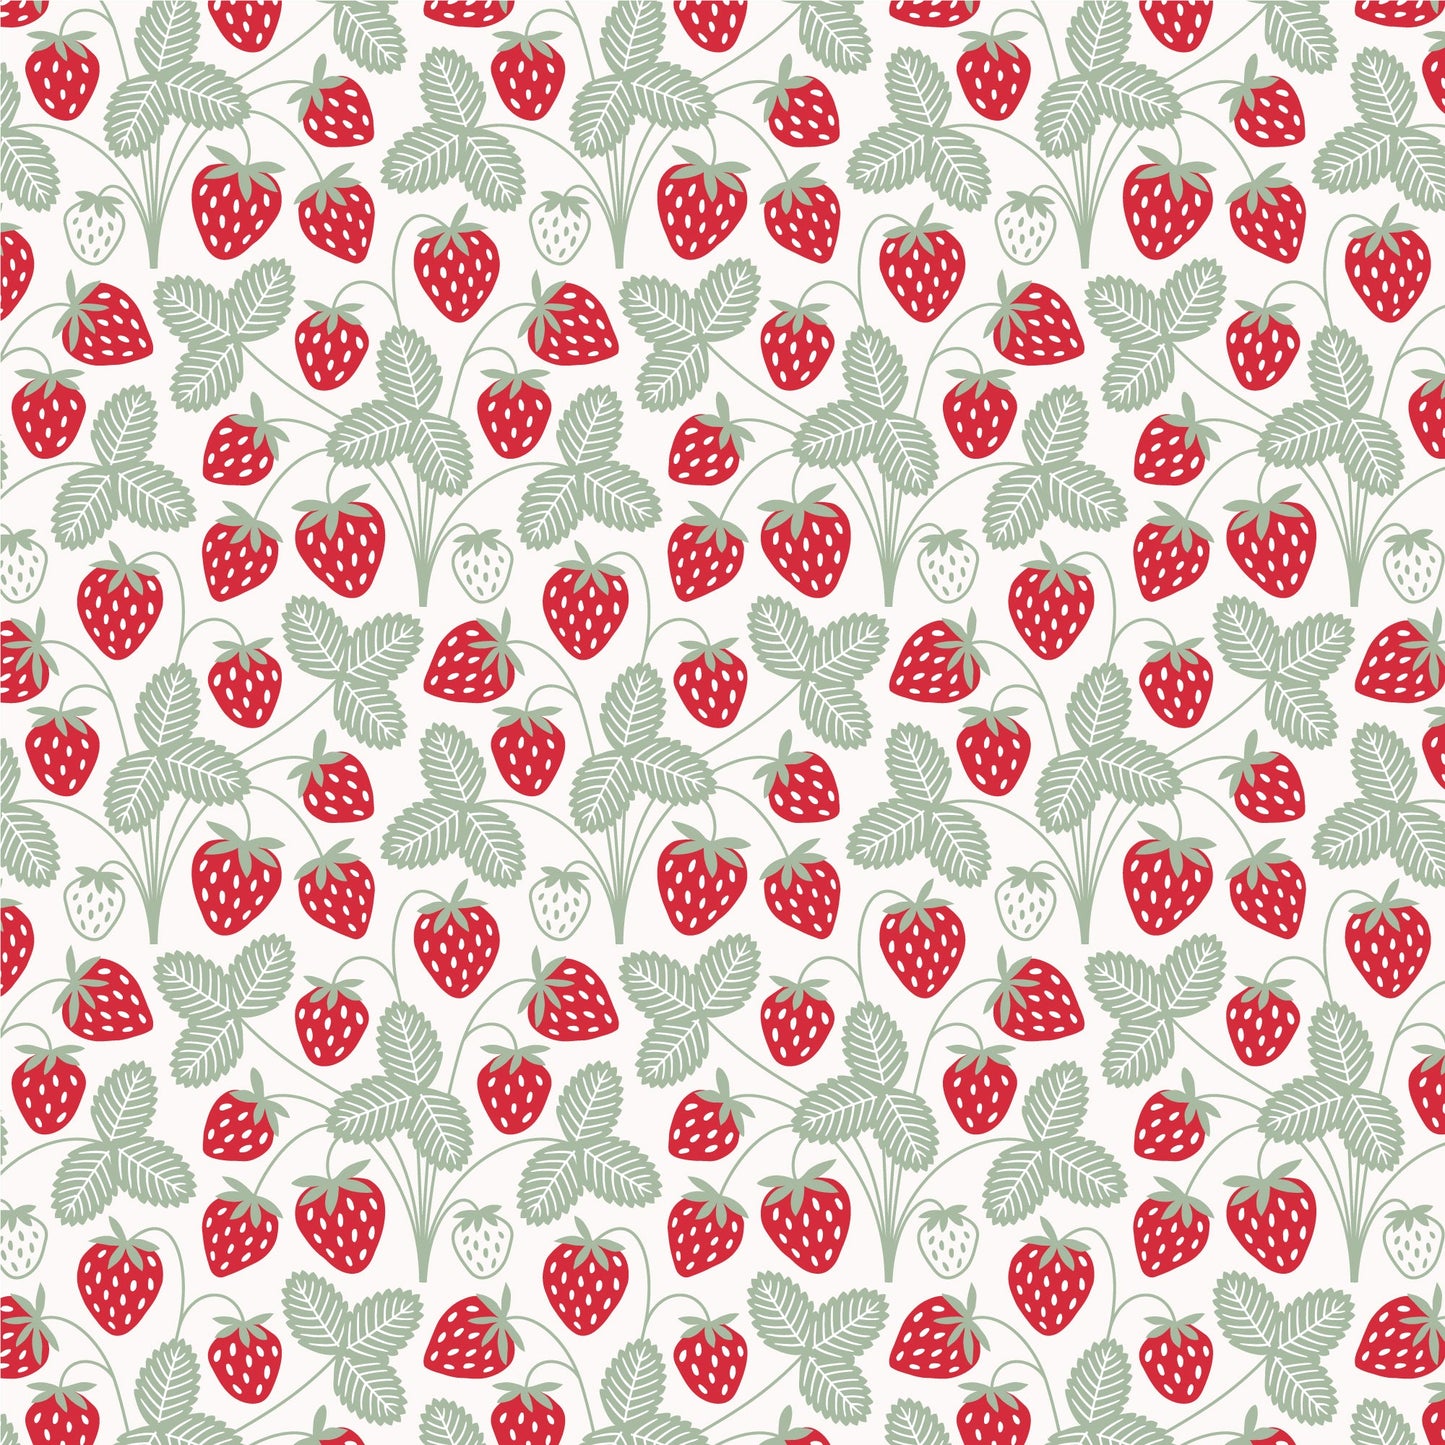 Long-Sleeve Romper - Strawberries Red & Green